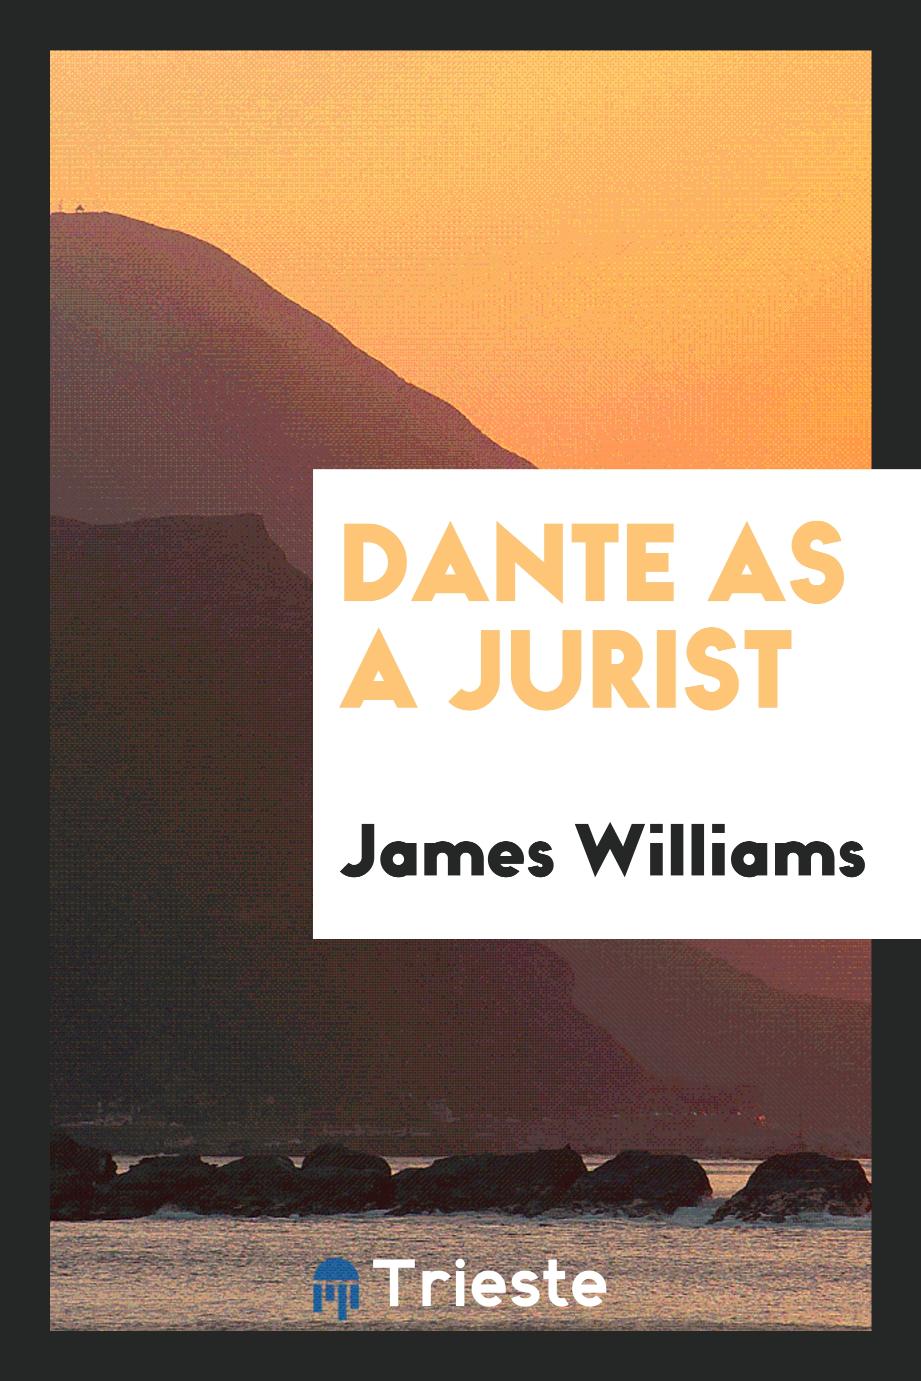 Dante as a Jurist